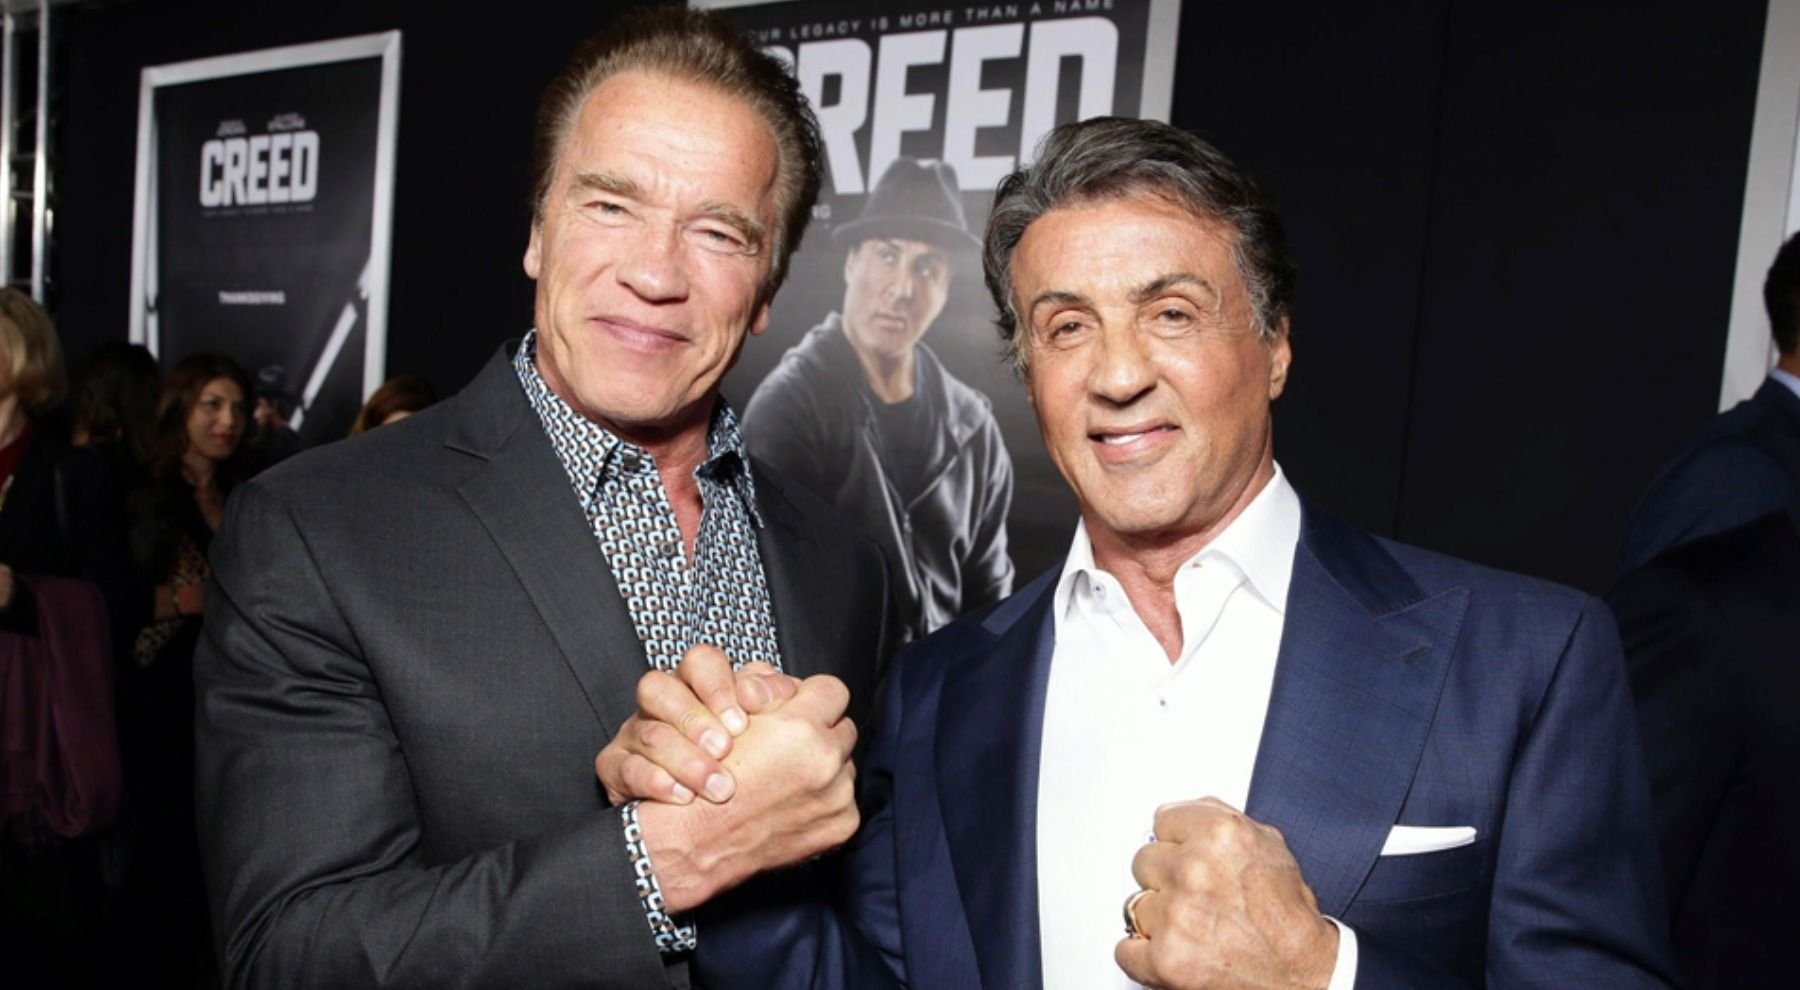 Who Has A Higher Net Worth: Arnold Schwarzenegger Or Sylvester Stallone?